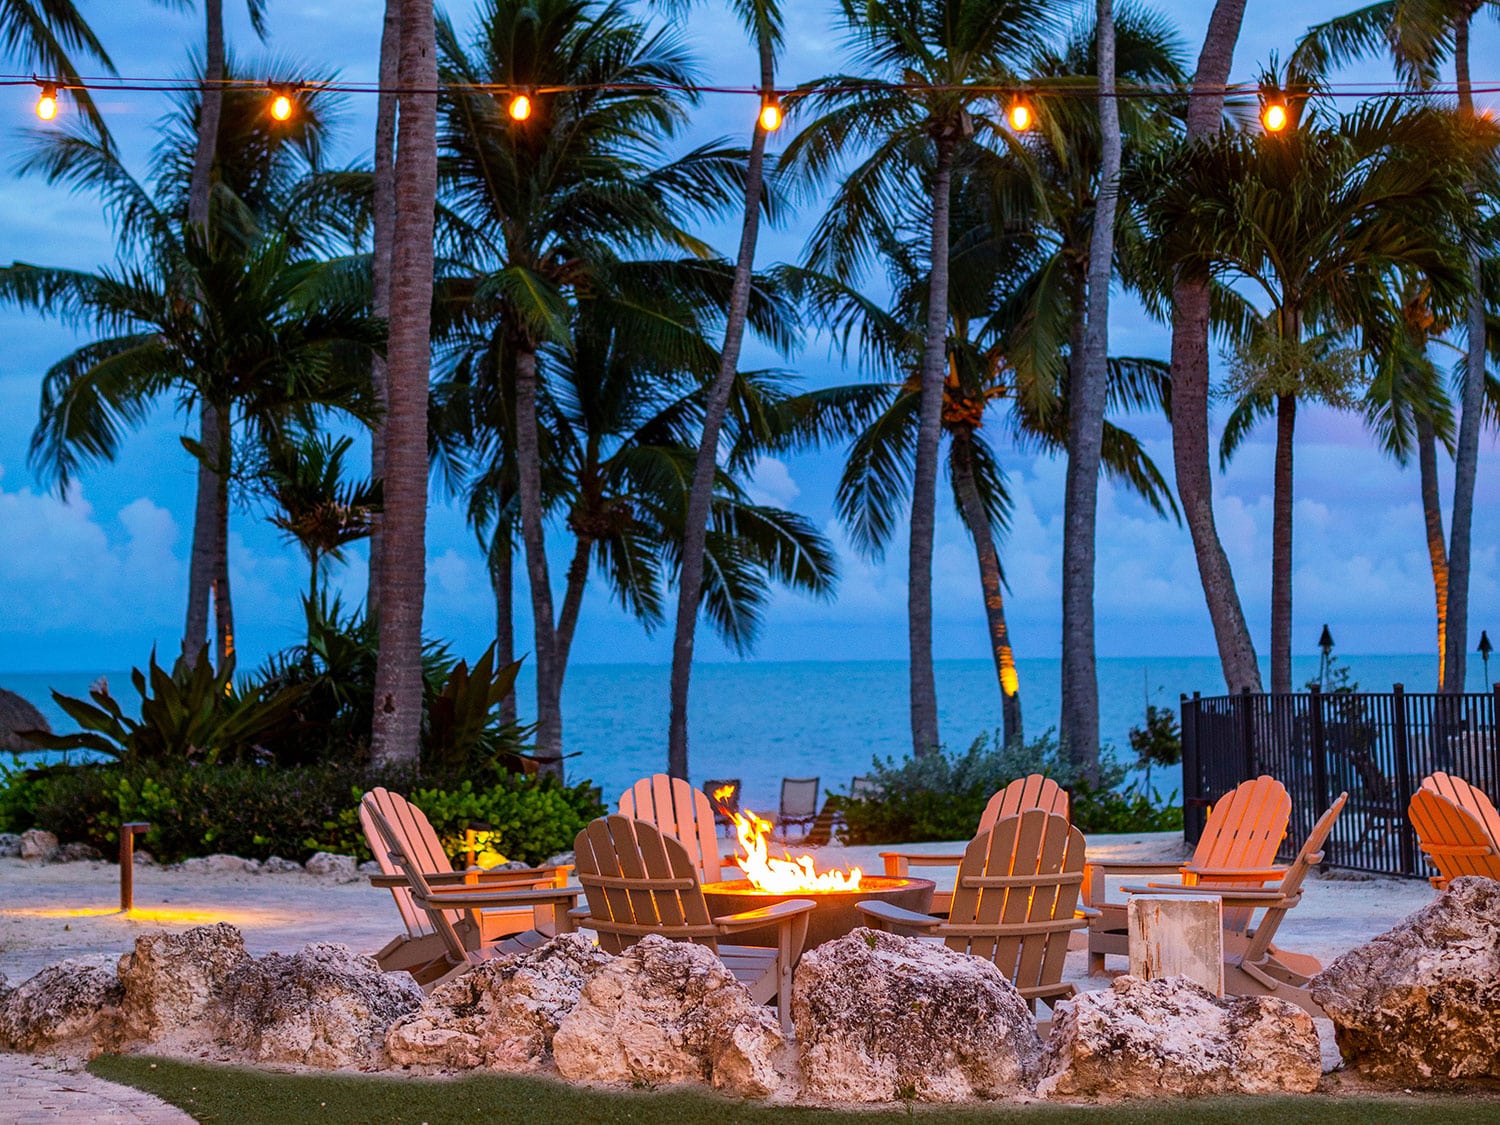 An outside seating area in the evening at Amara Cay Resort in Islamorada, Florida.